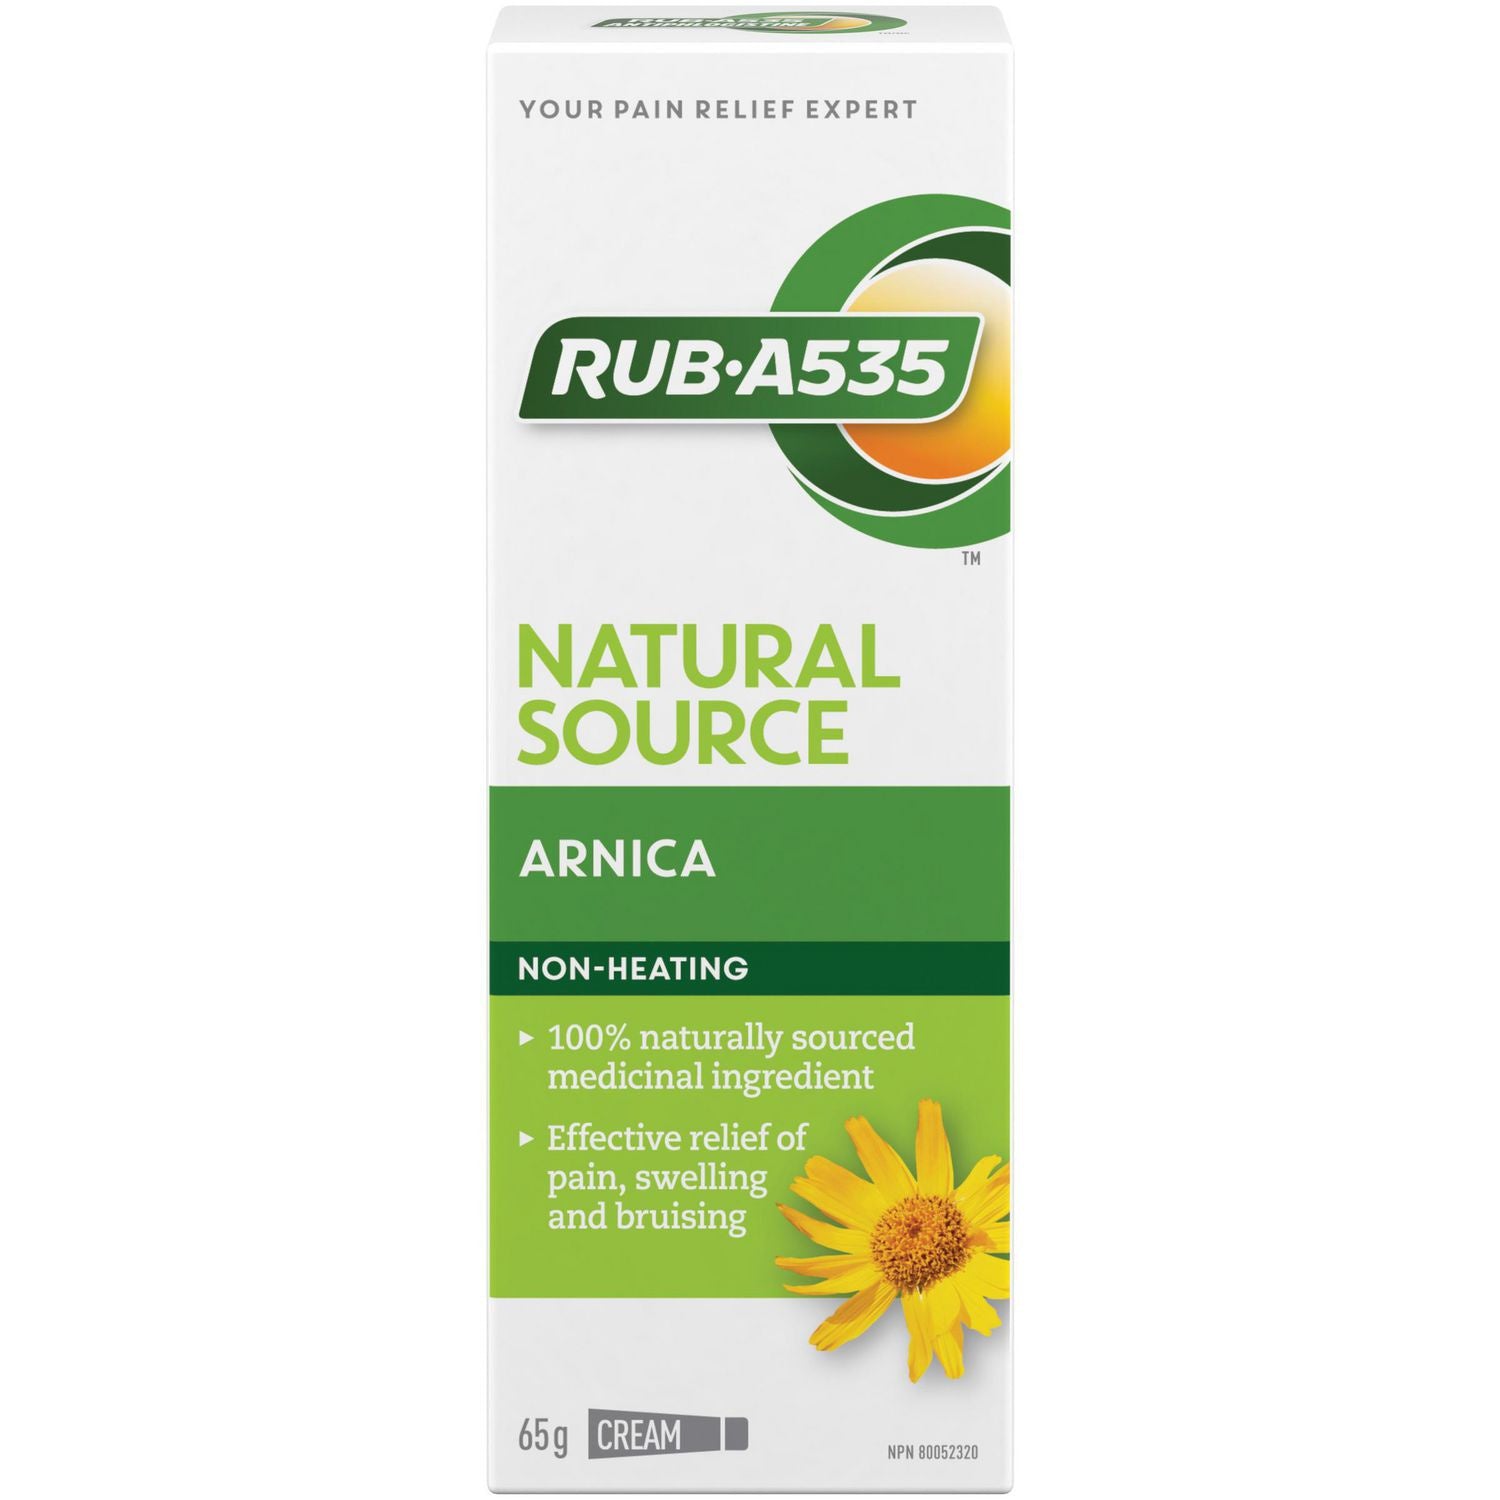 RUB-A535 Arnica Cream, Natural Source Non-Heating, 65g